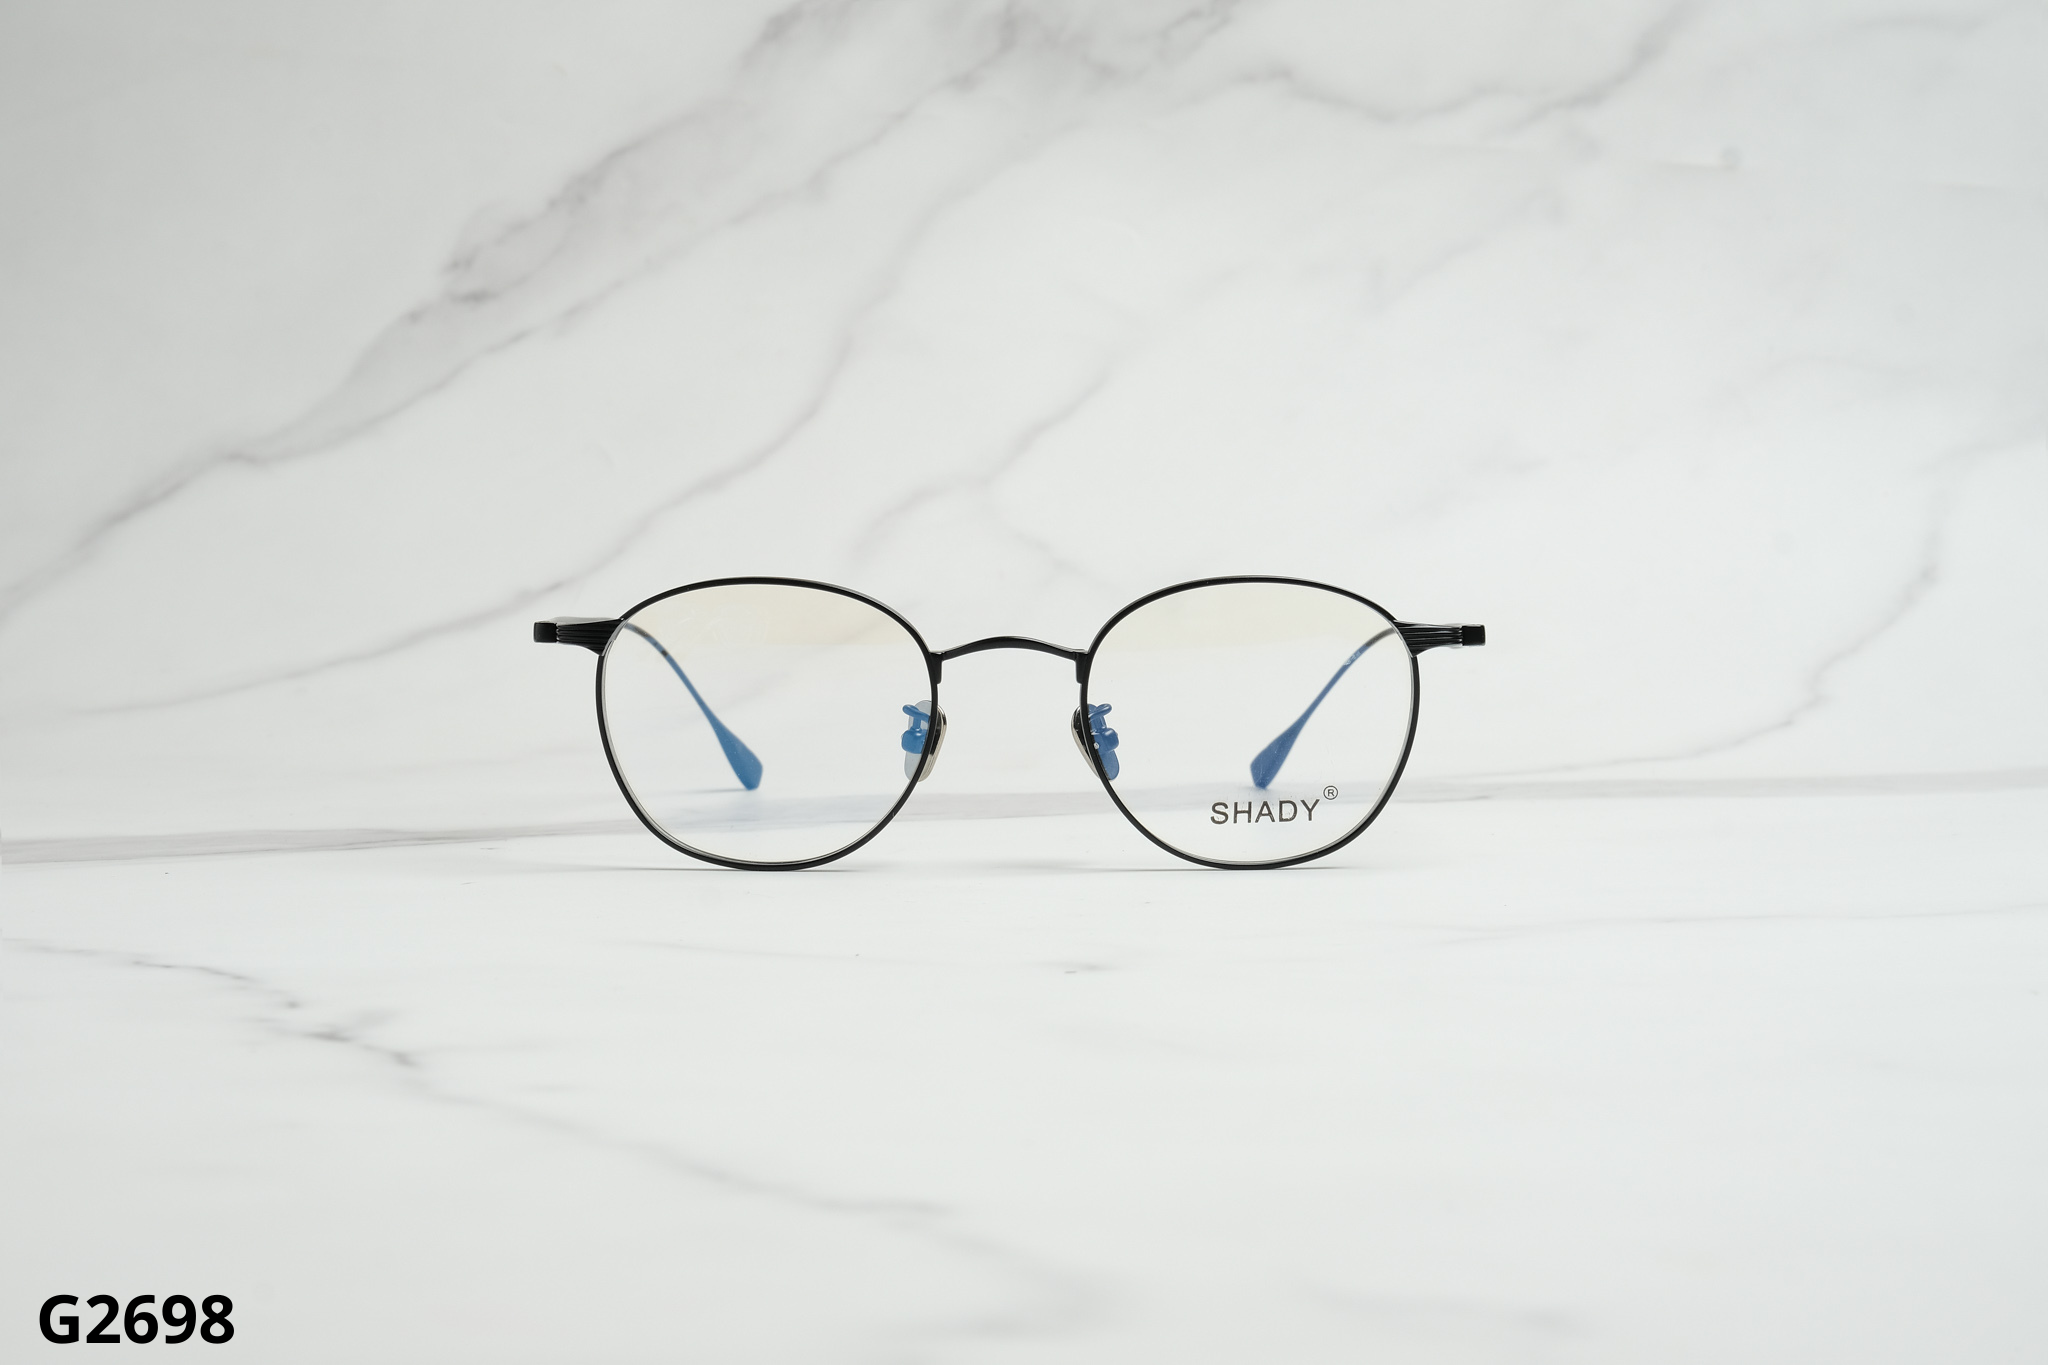  SHADY Eyewear - Glasses - G2698 